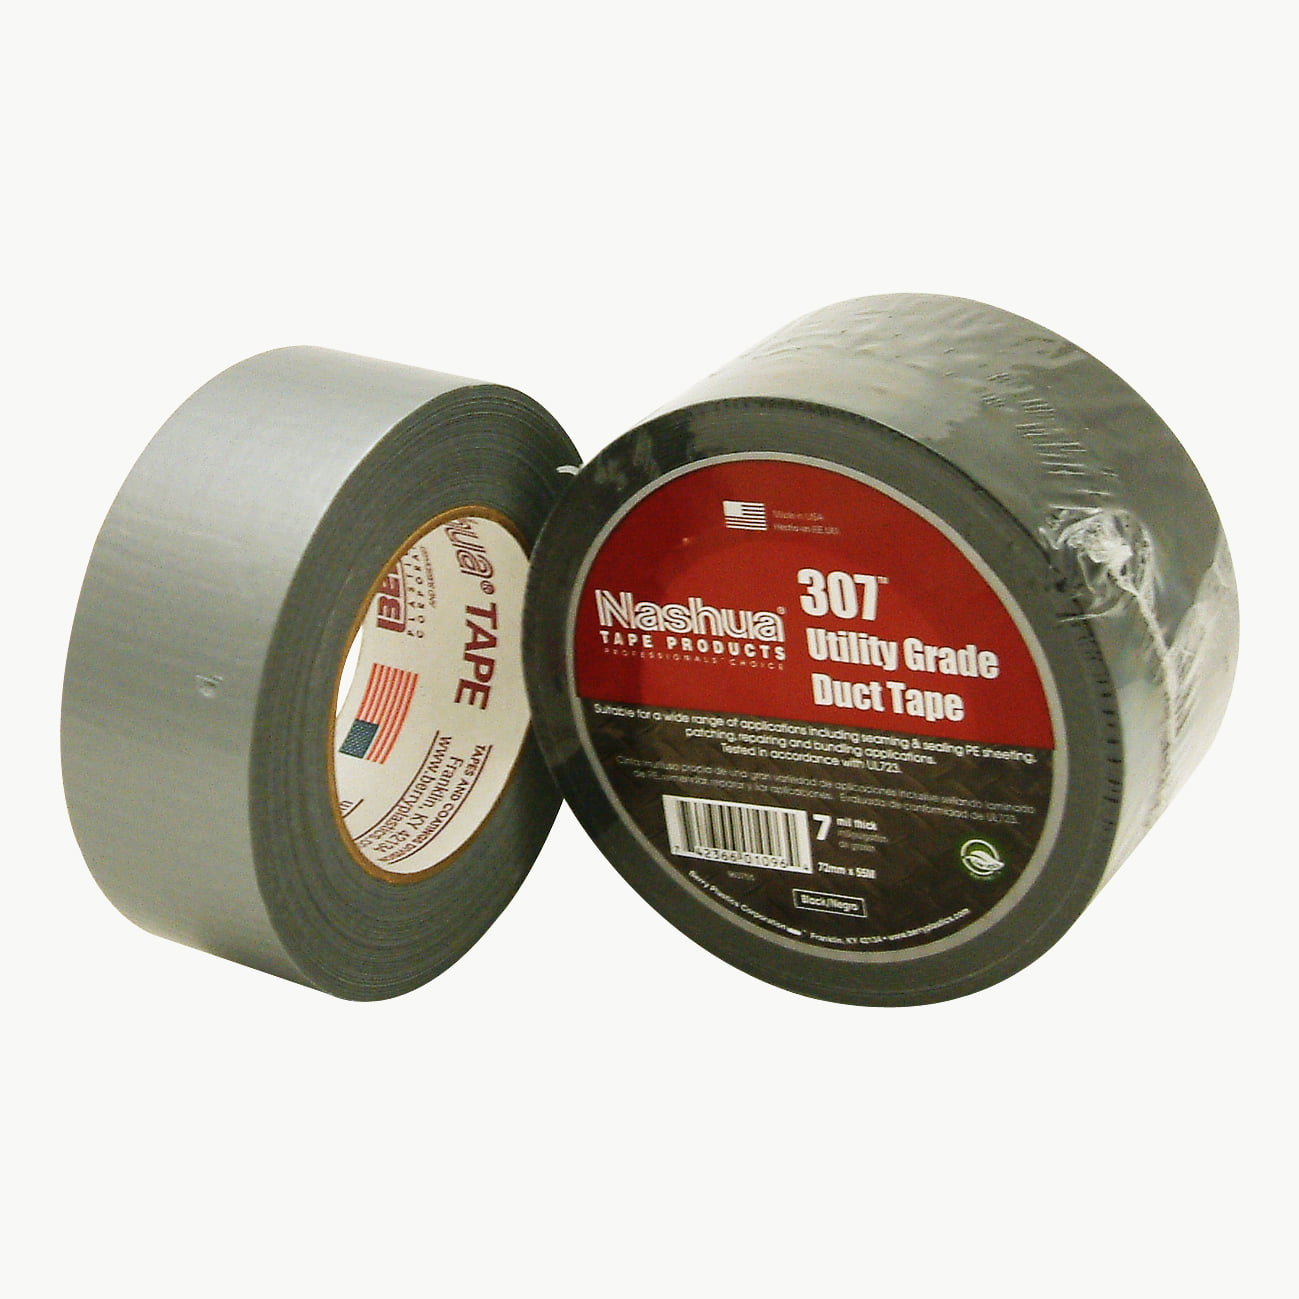 48mm x 50m 2" x 60 yds -  12 ROLLS NASHUA 307 Silver Utility Grade Duct Tape 